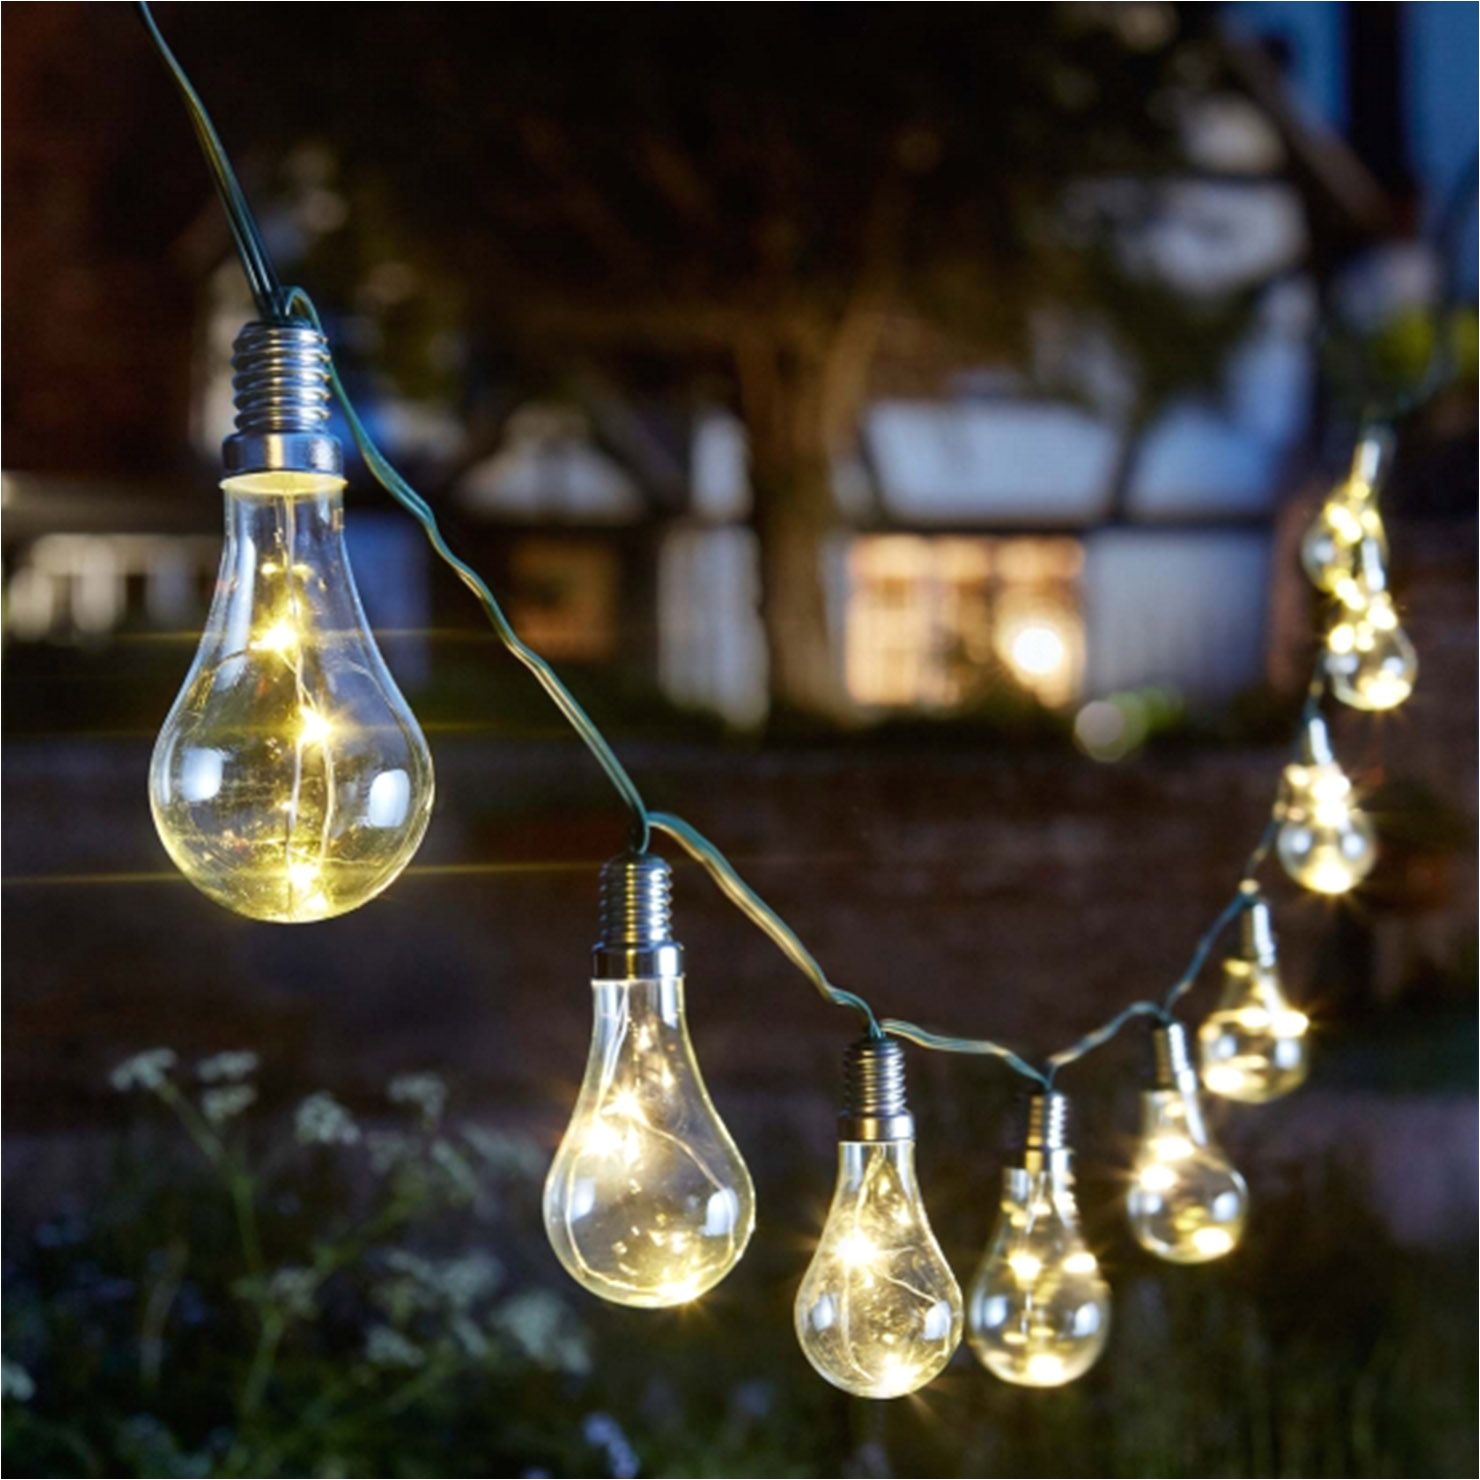 lightbulb string lights